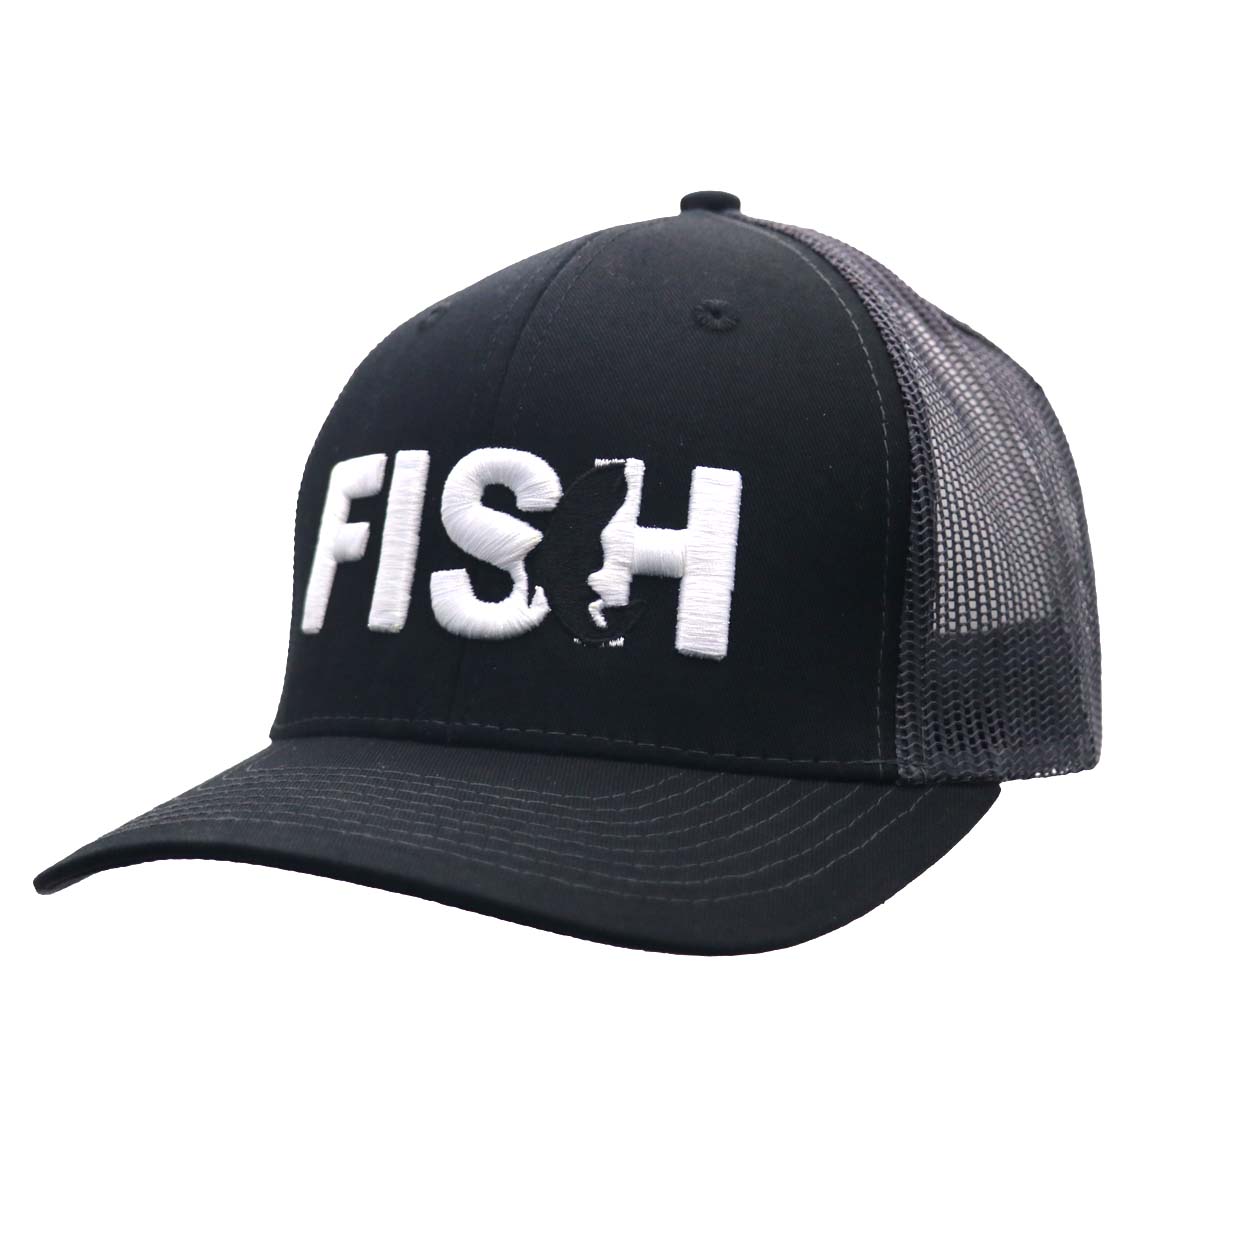 Fish Catch Logo Classic Embroidered Snapback Trucker Hat Black/Dark Gray